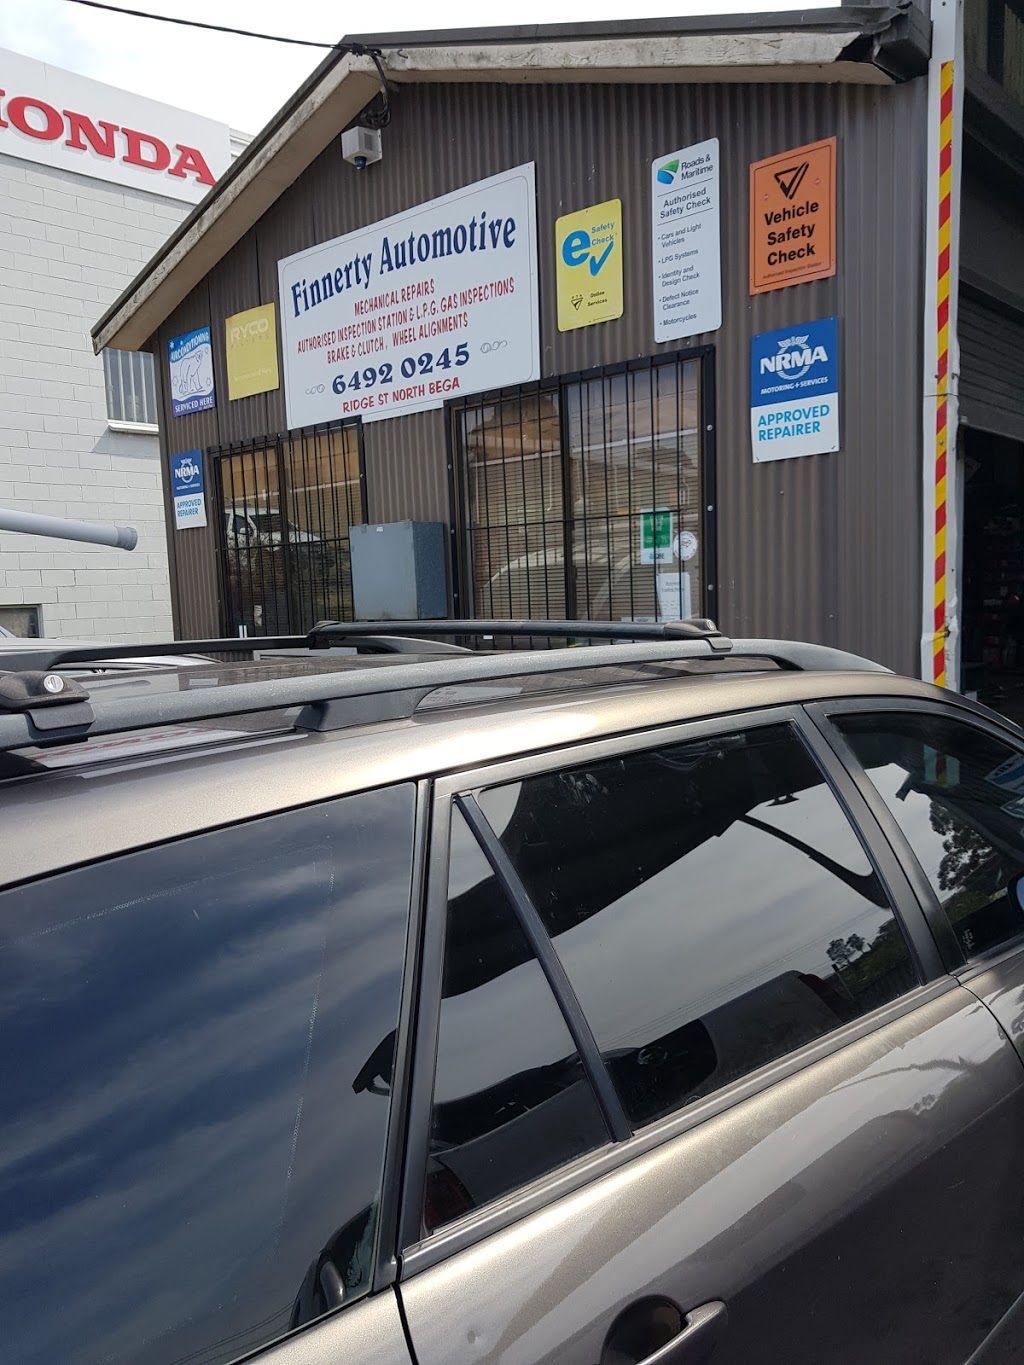 Finnerty Automotive | car repair | 56/58 West St, Bega NSW 2550, Australia | 0264920245 OR +61 2 6492 0245